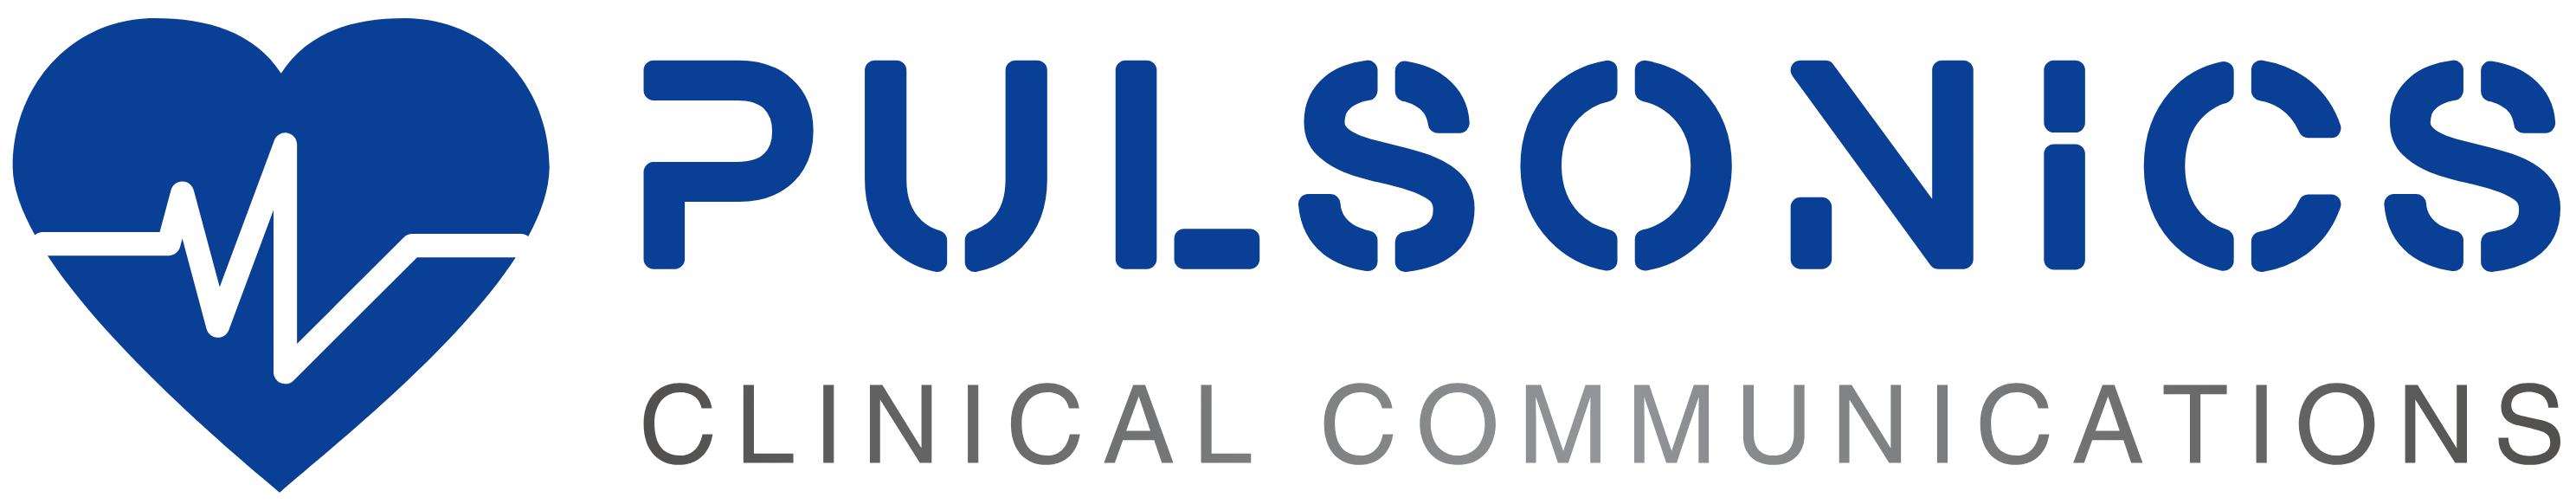 Pulsonics logo